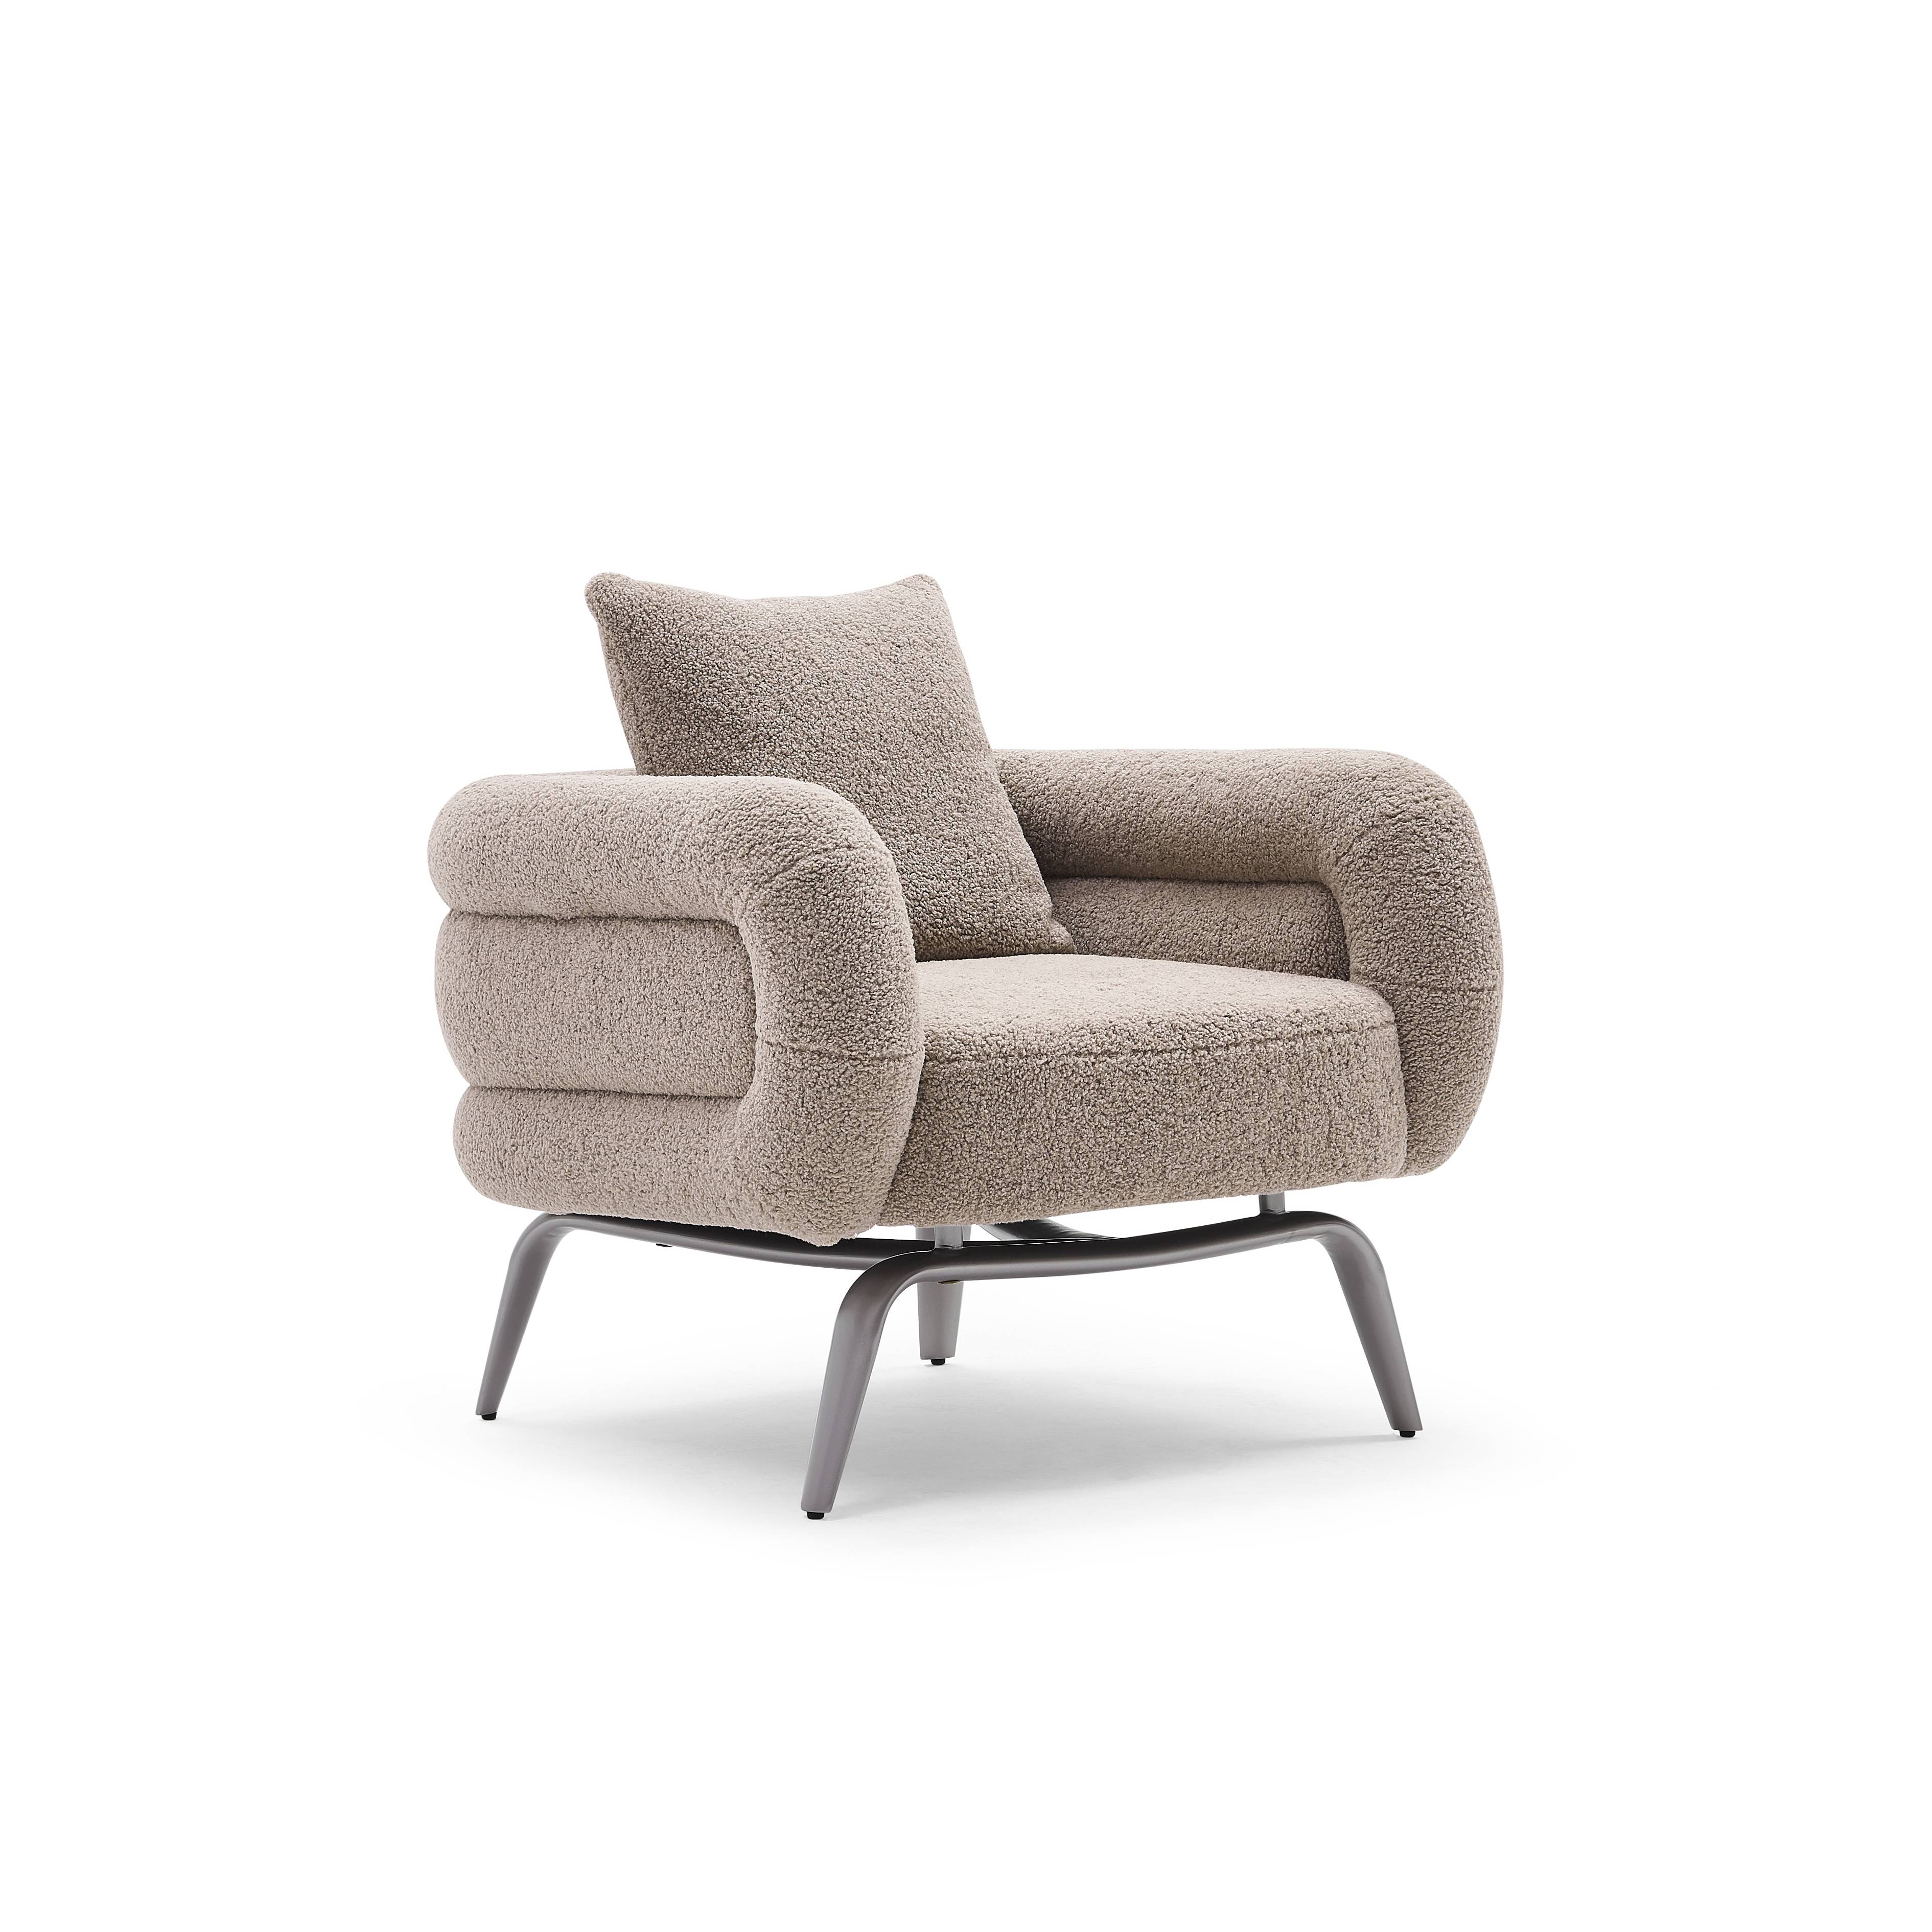 Italian Design Chair Sofa